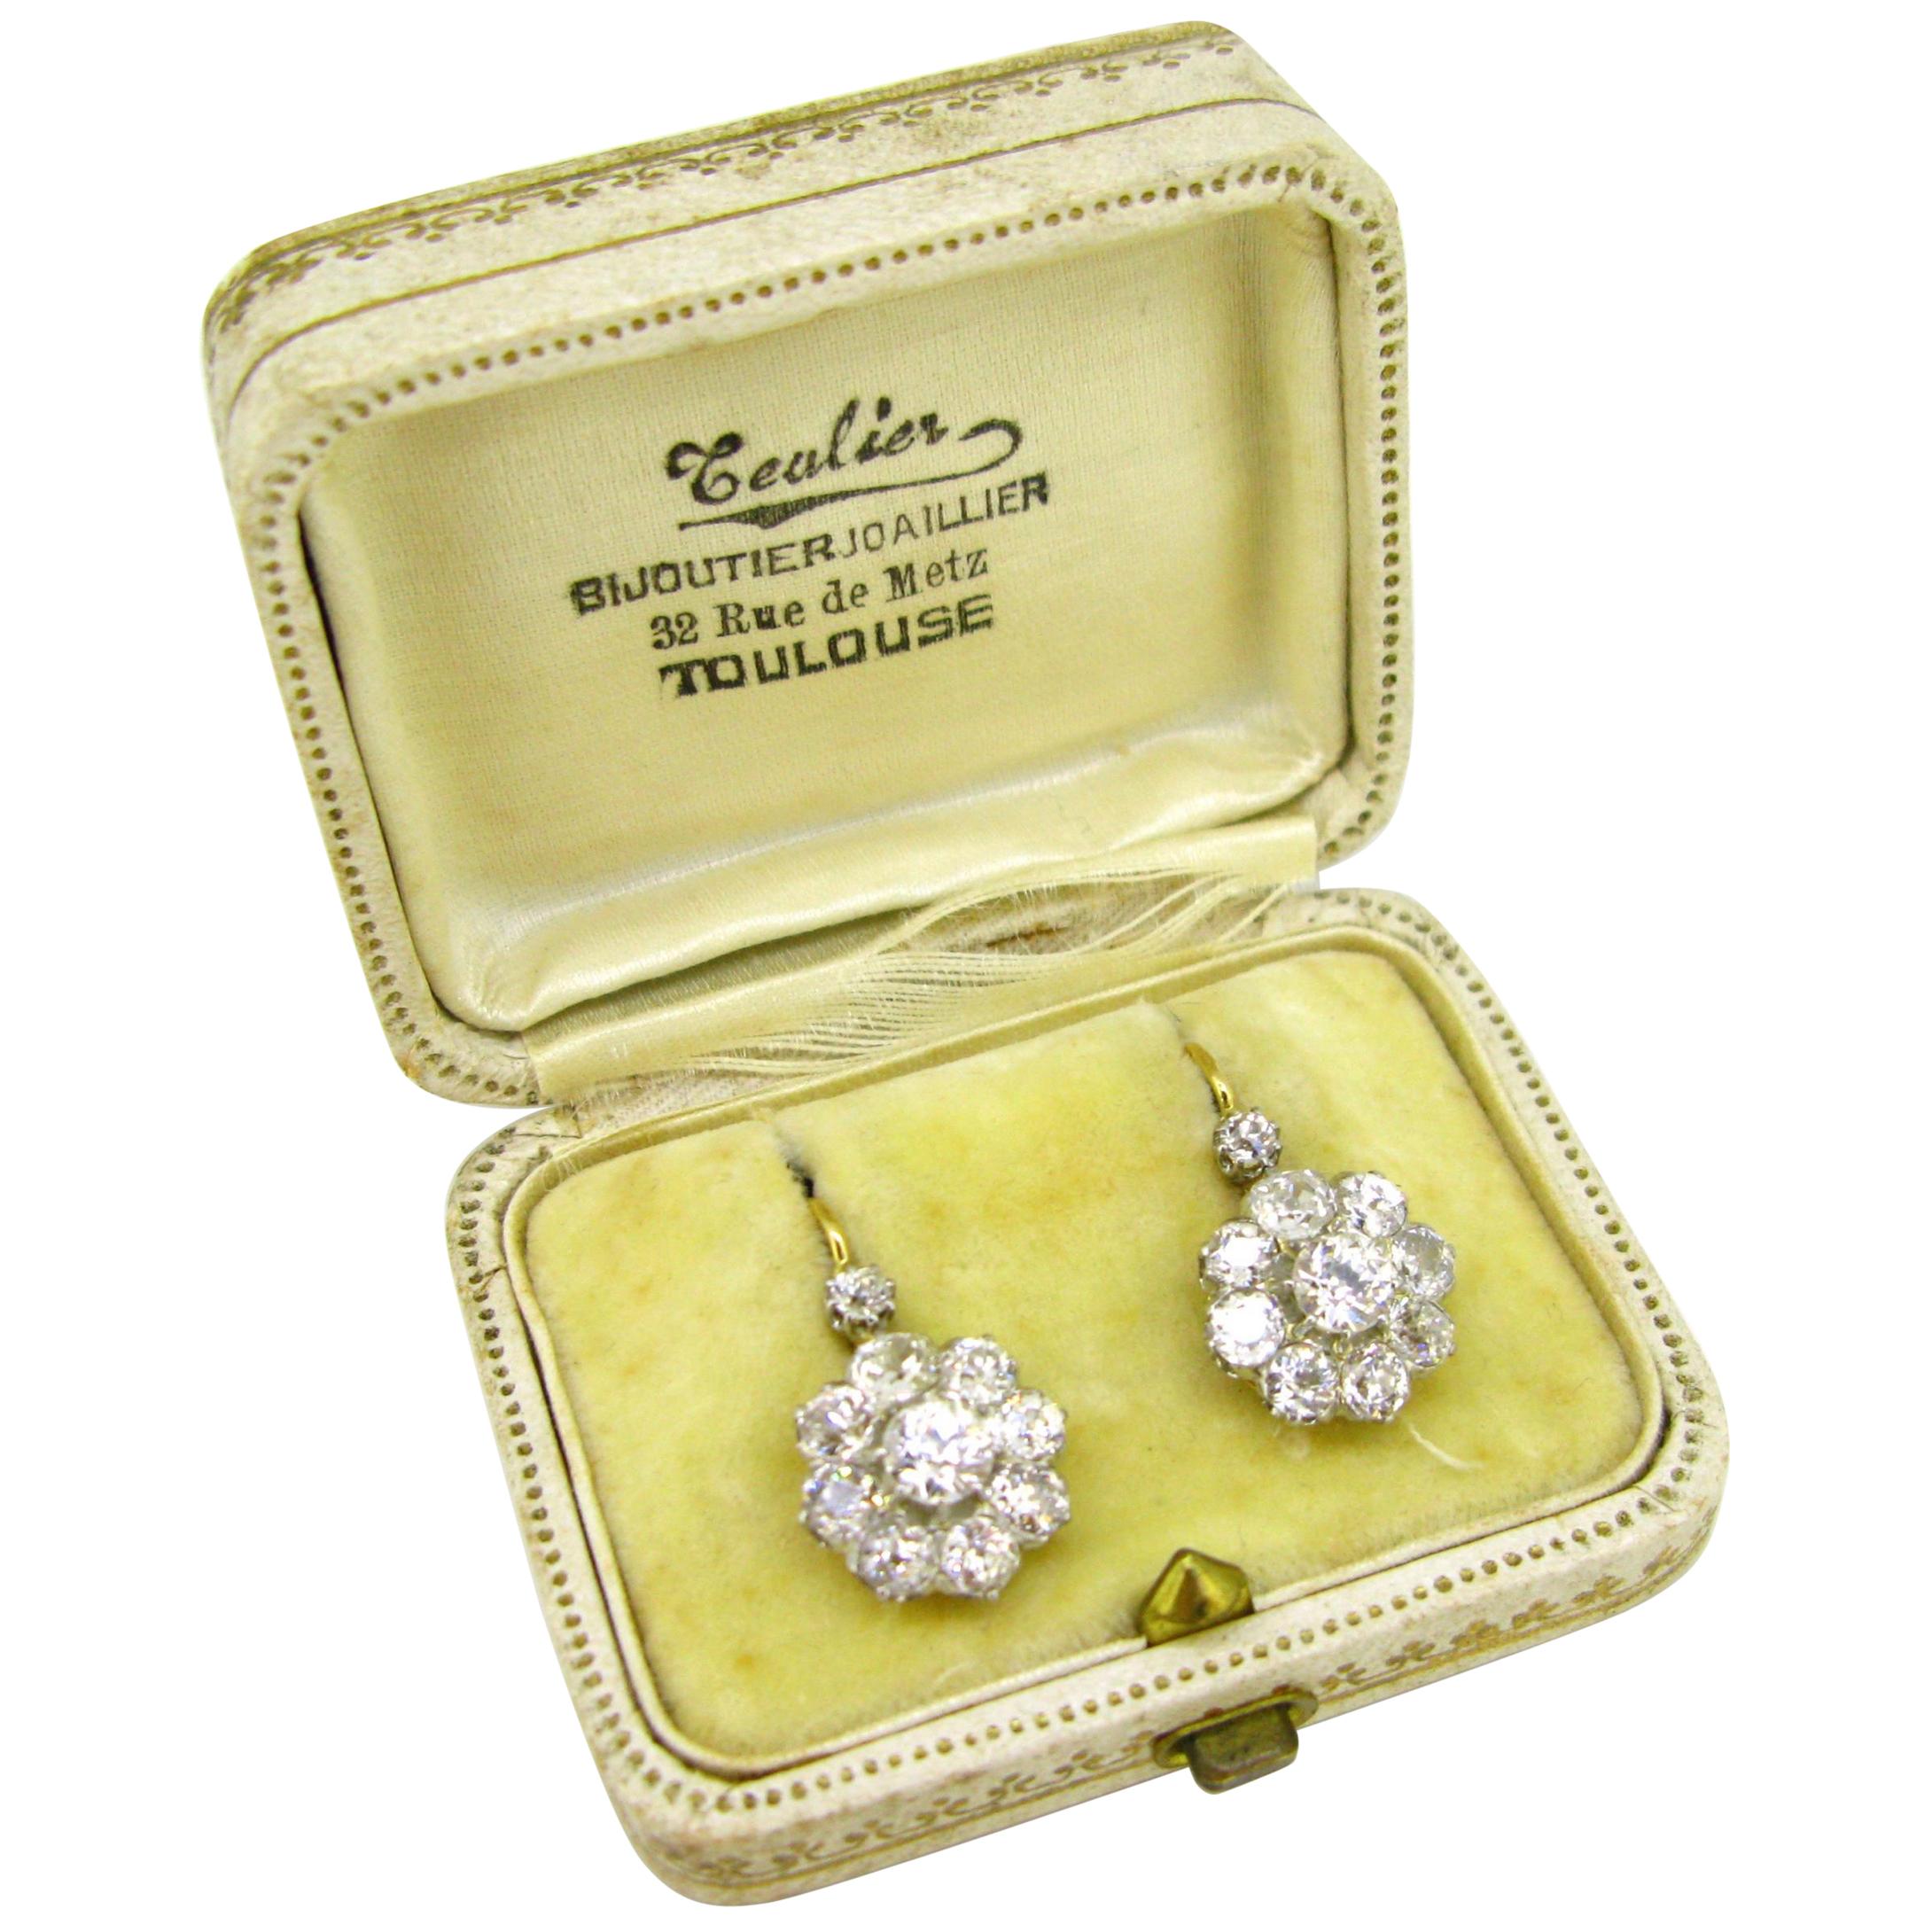 Antique Belle Époque Diamonds Dormeuses Earrings in Box, 18kt Gold and Platinum